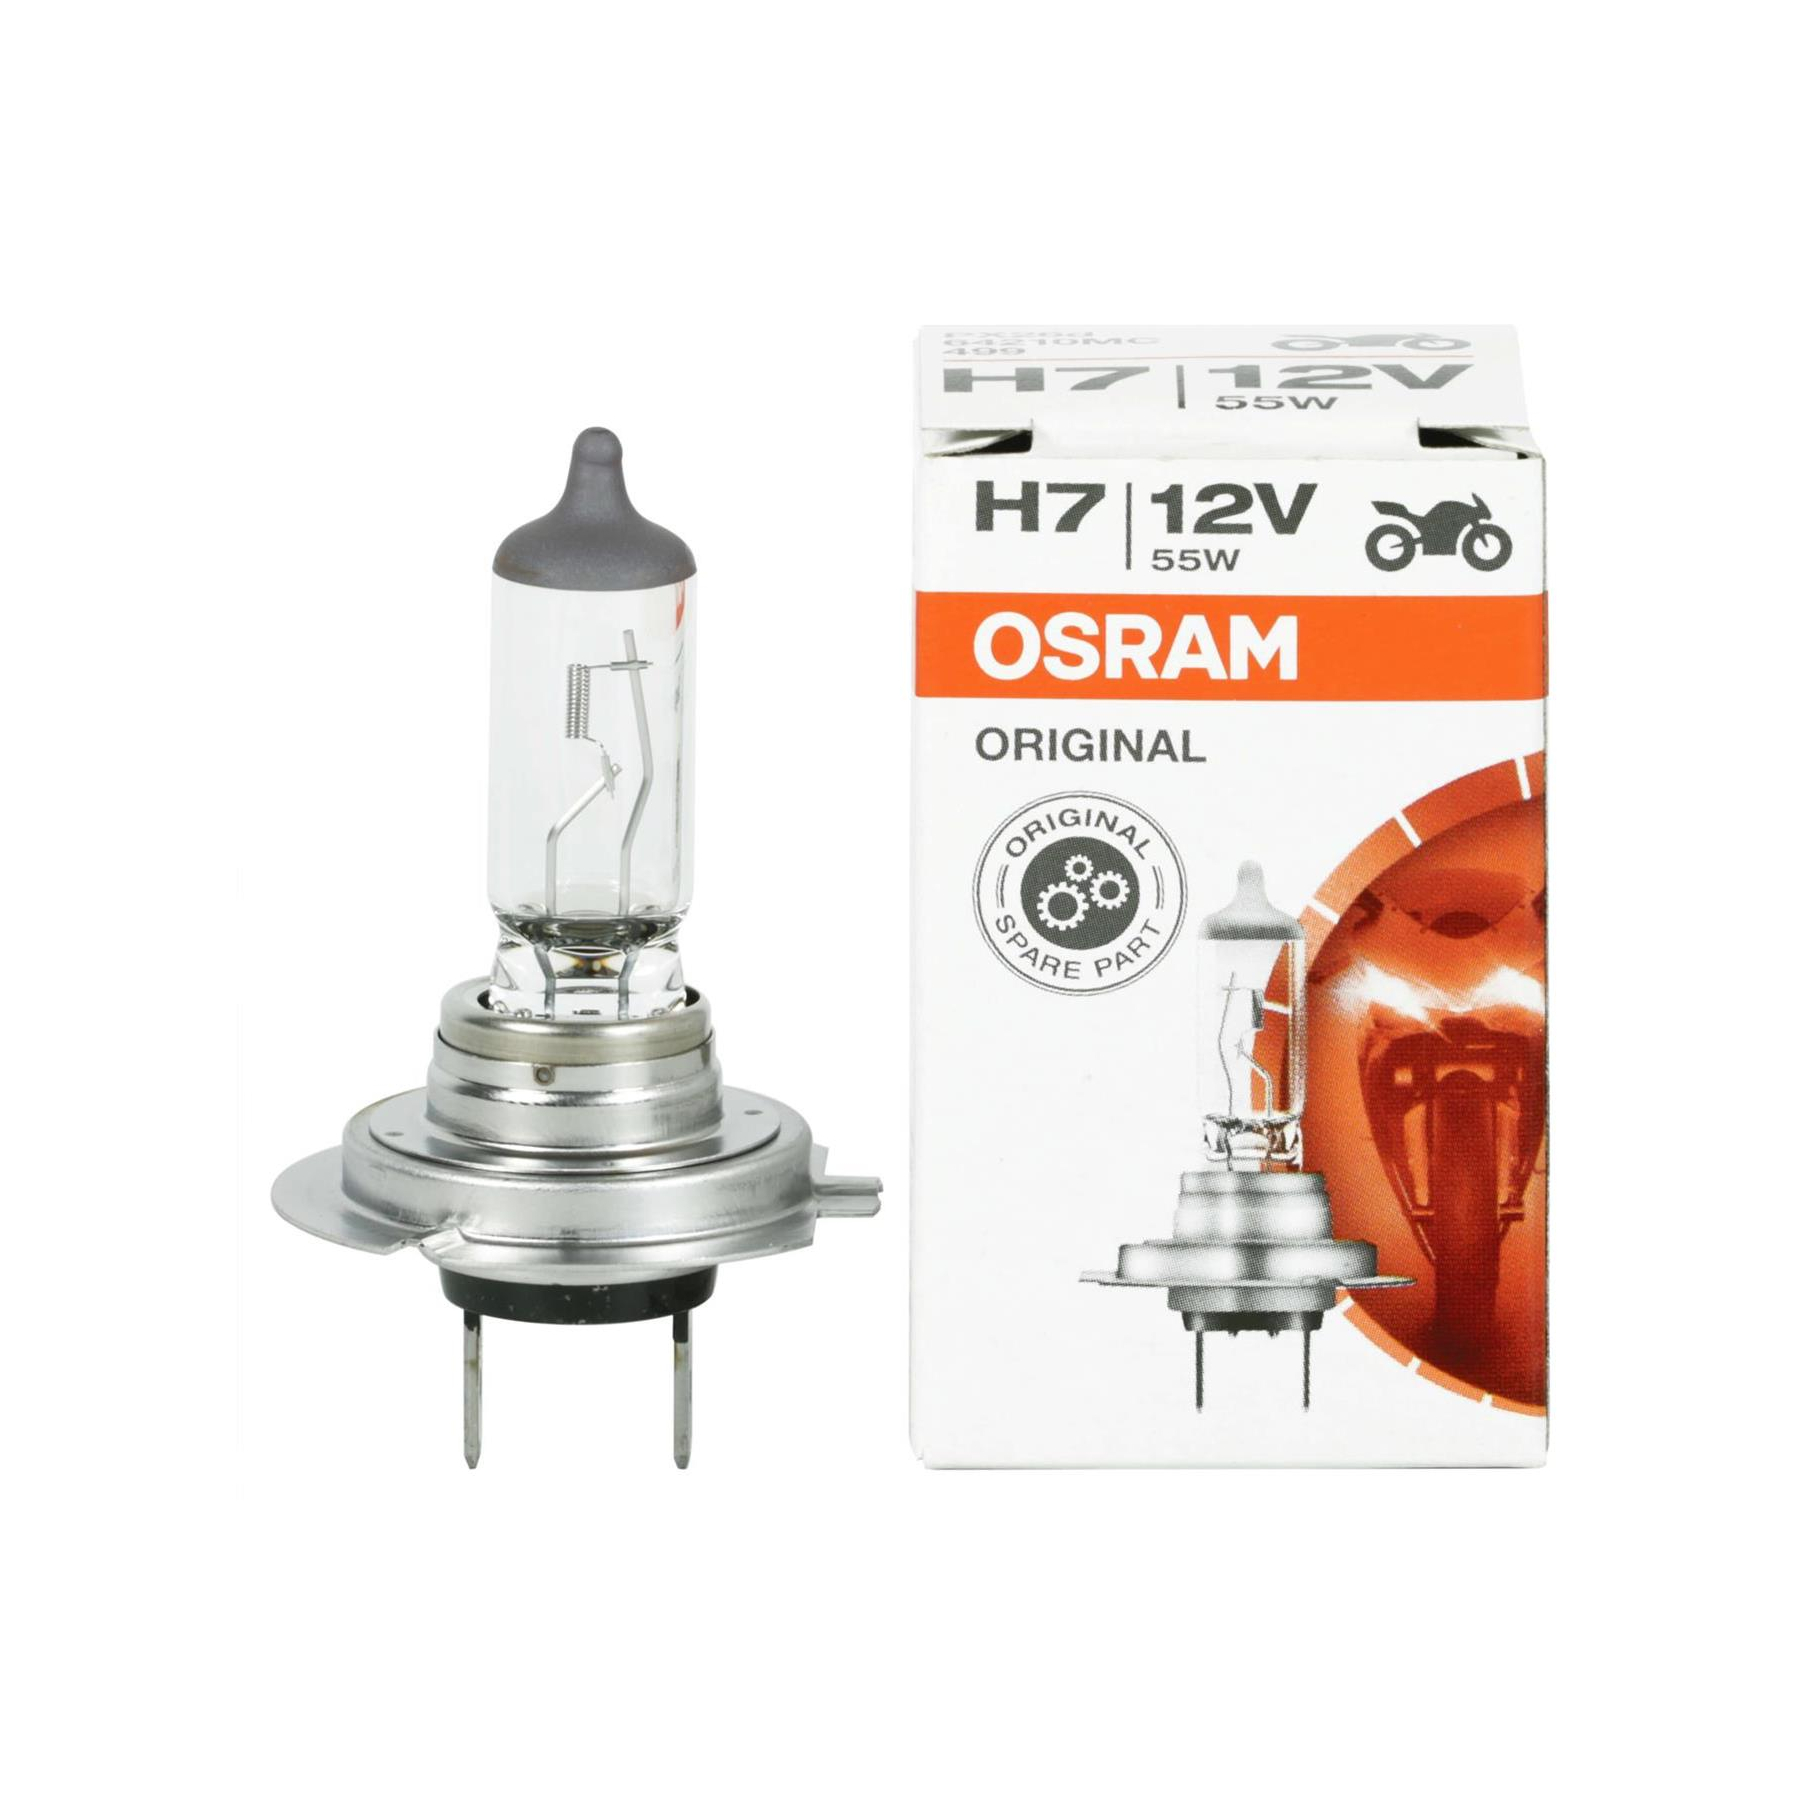 https://electronicx.de/media/image/product/3142/lg/osram-original-h7-halogen-scheinwerferlampe-64210mc-12v-faltschachtel-1-stueck.jpg